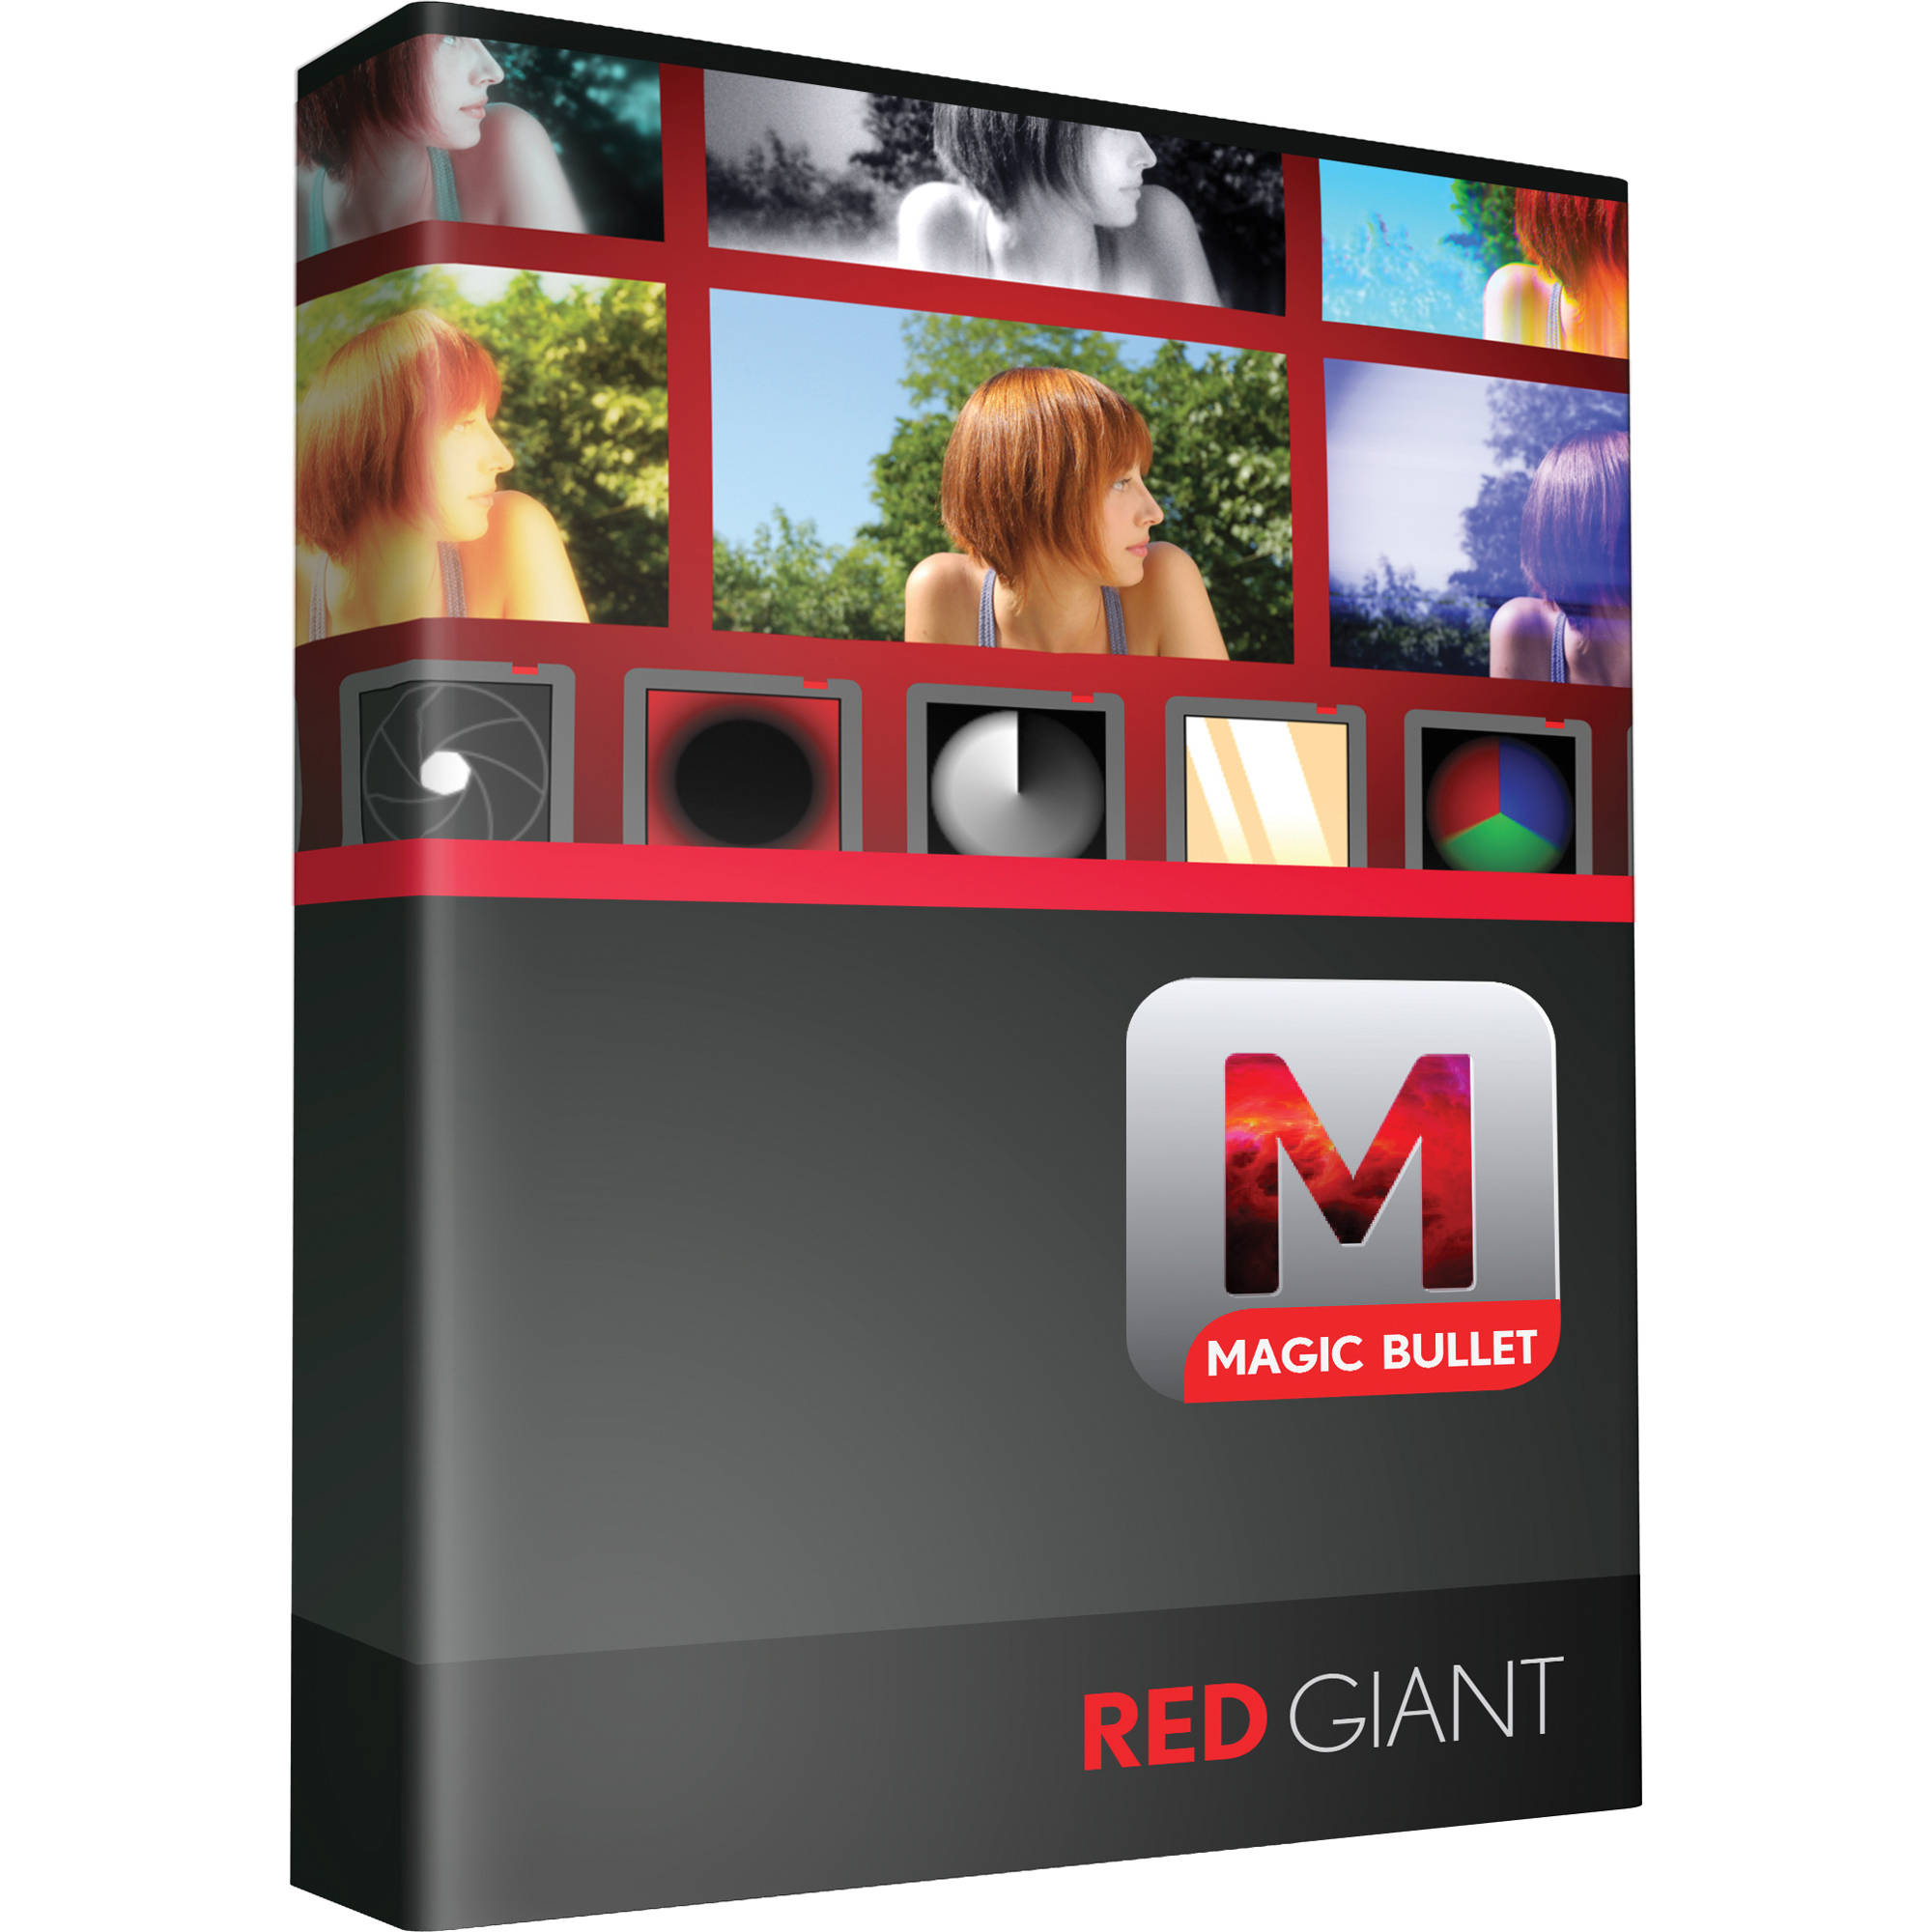 Magic bullet suite. Red giant Magic Bullet. Red giant Magic Bullet looks. Red giant Magic Bullet Suite. Magic Bullet looks logo.